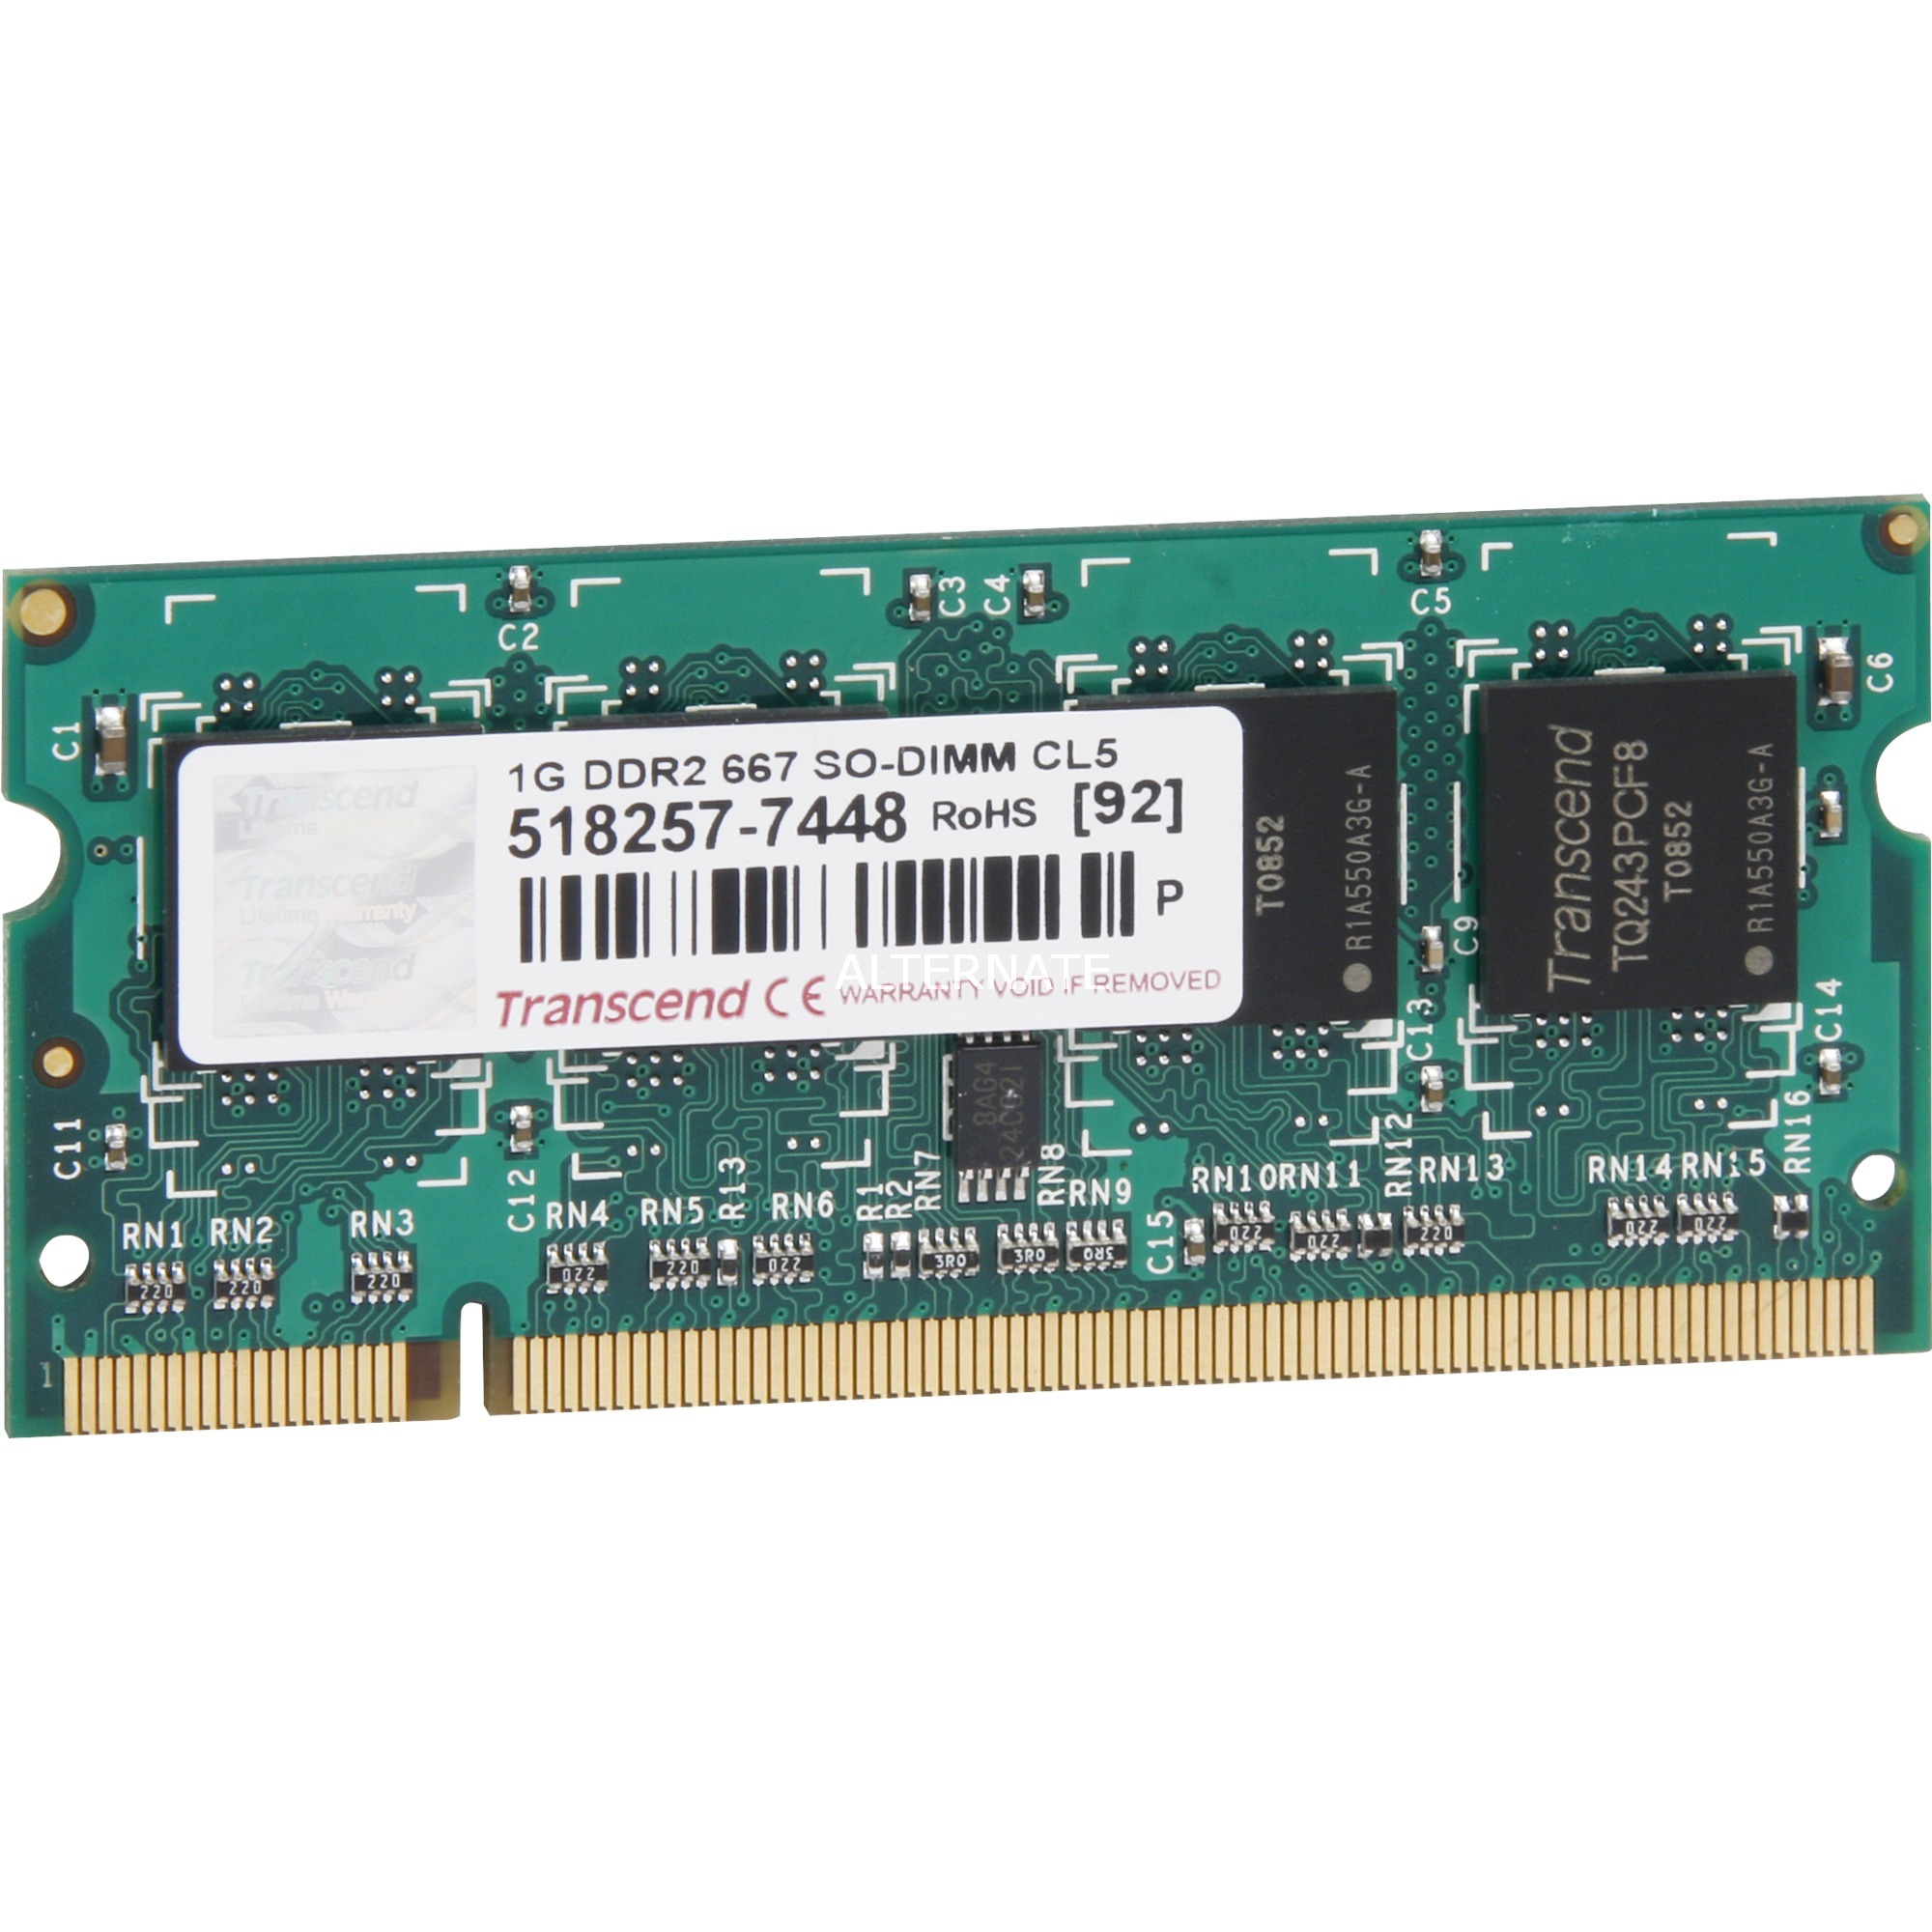 DDR2-667 1GB JM667QSU-2G 1GB DDR2 667Mhz moduł pamięci, Pamięc operacyjna